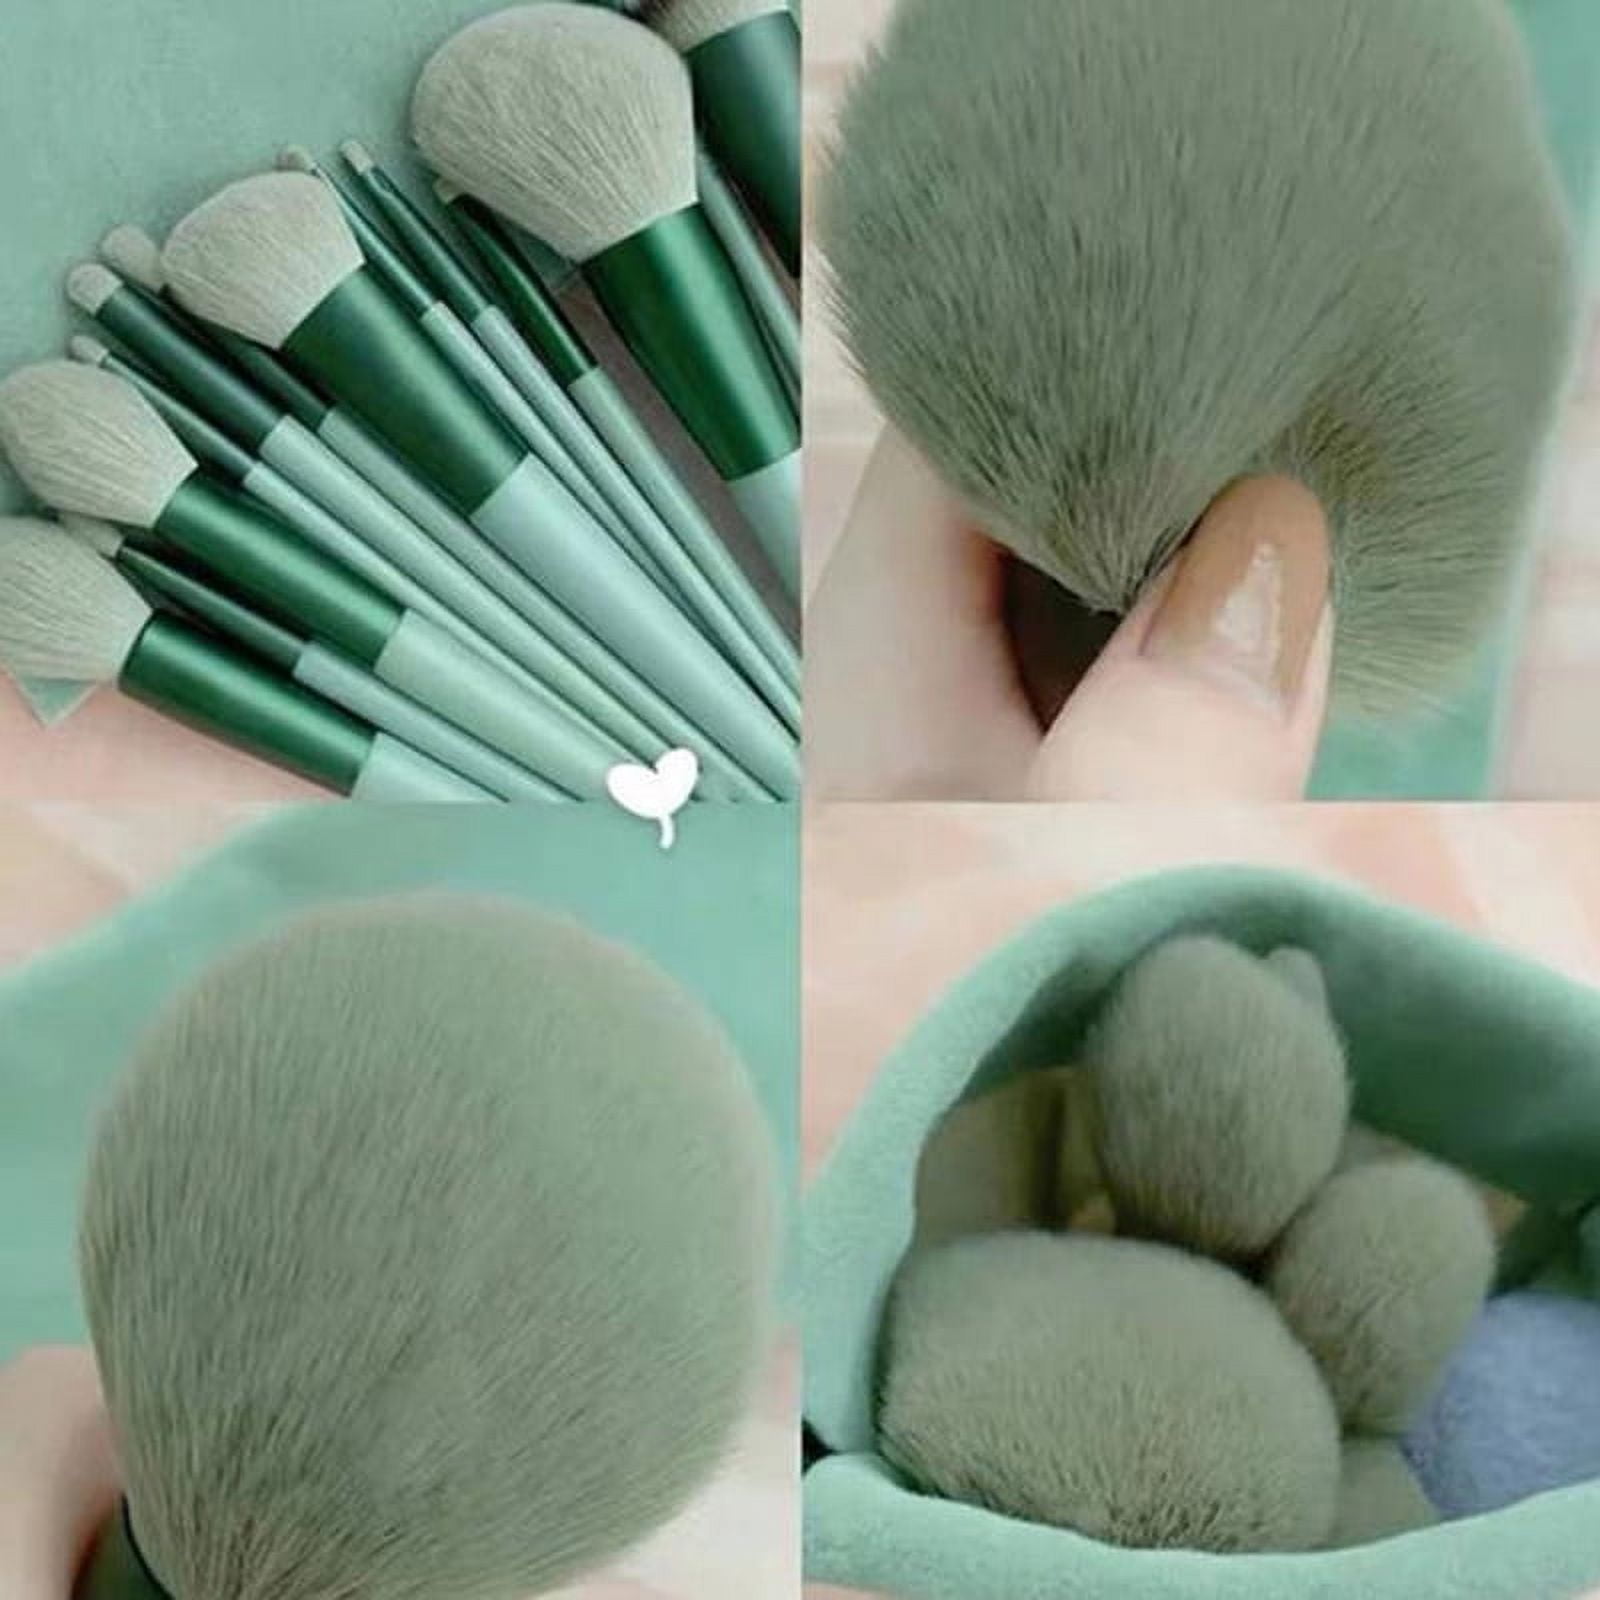 The Beauty Concept Makeup Brush Set – Walkin Closet